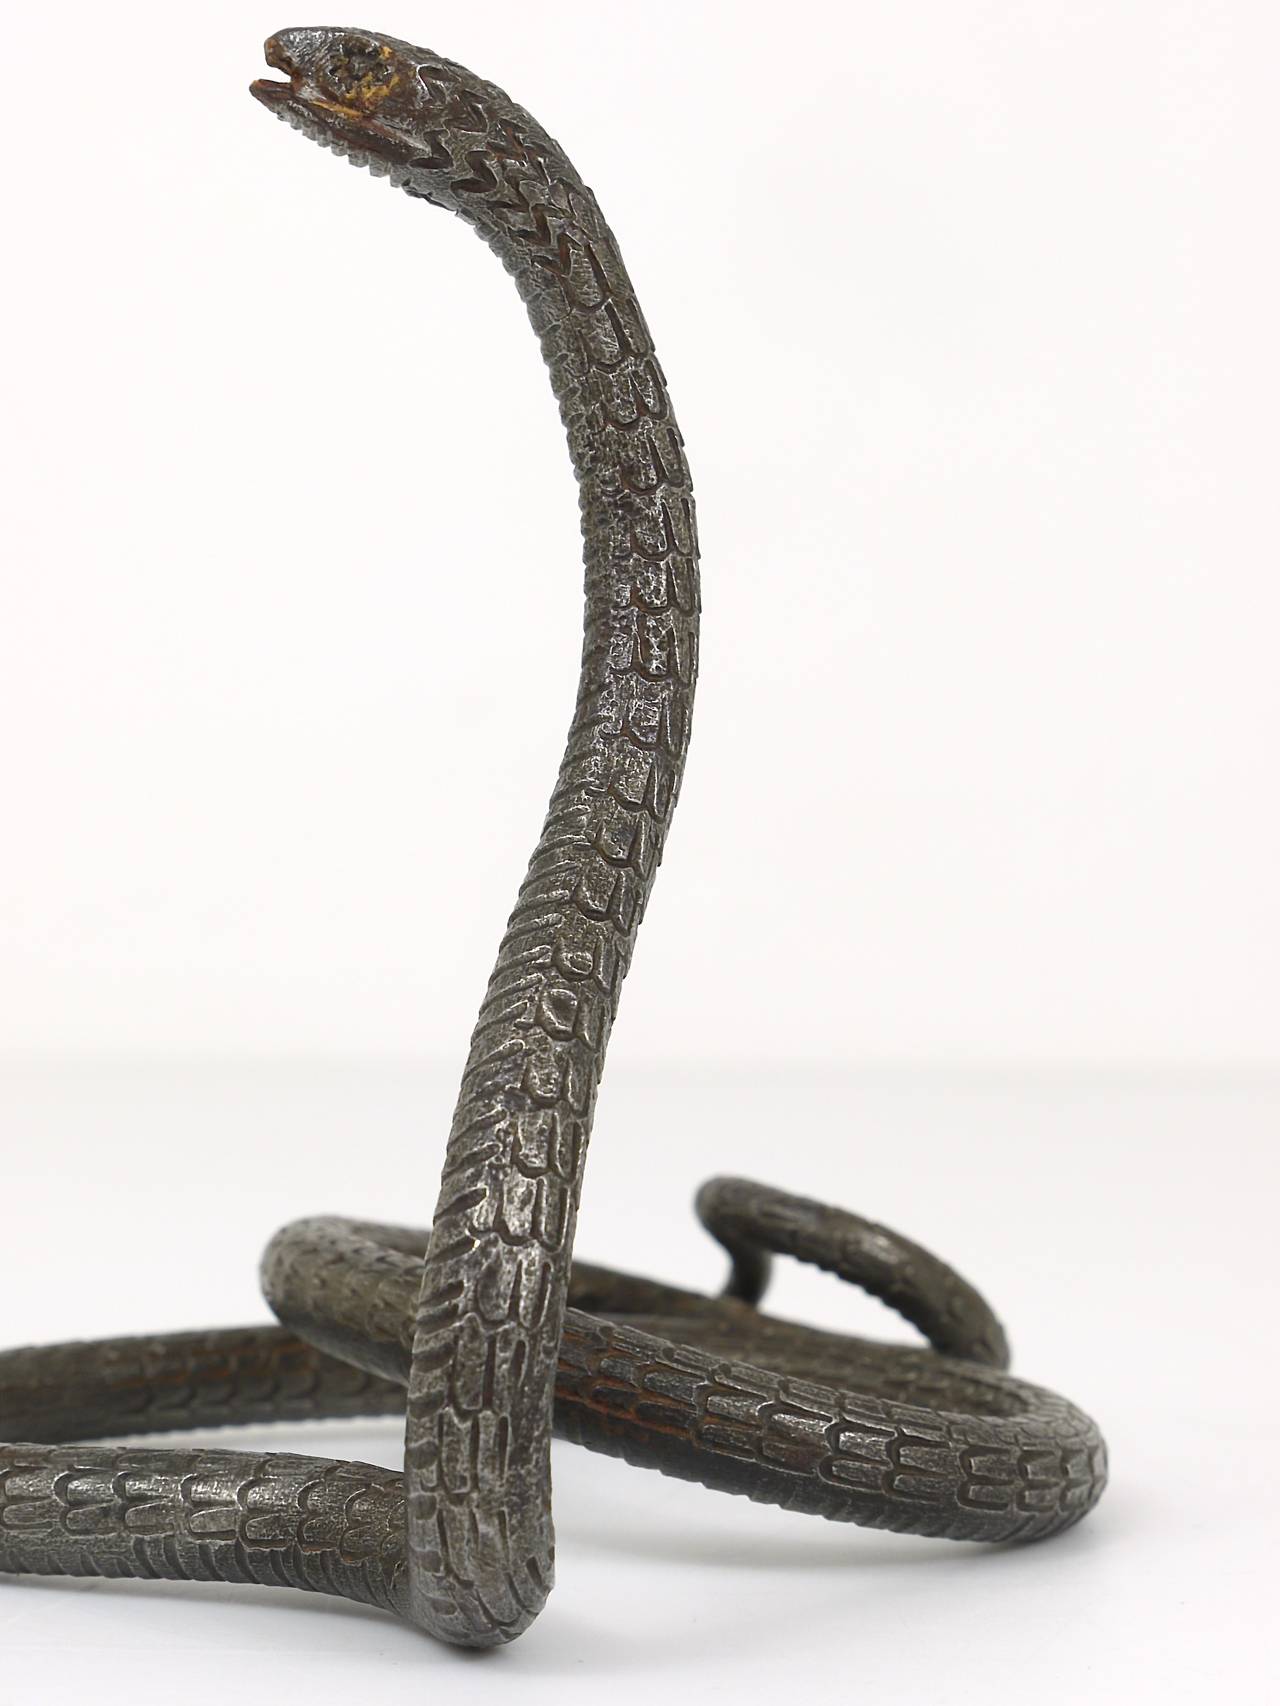 Austrian A Hand-Forged Iron Model Of A Snake, Snake Sculpture, Vienna, 1920s